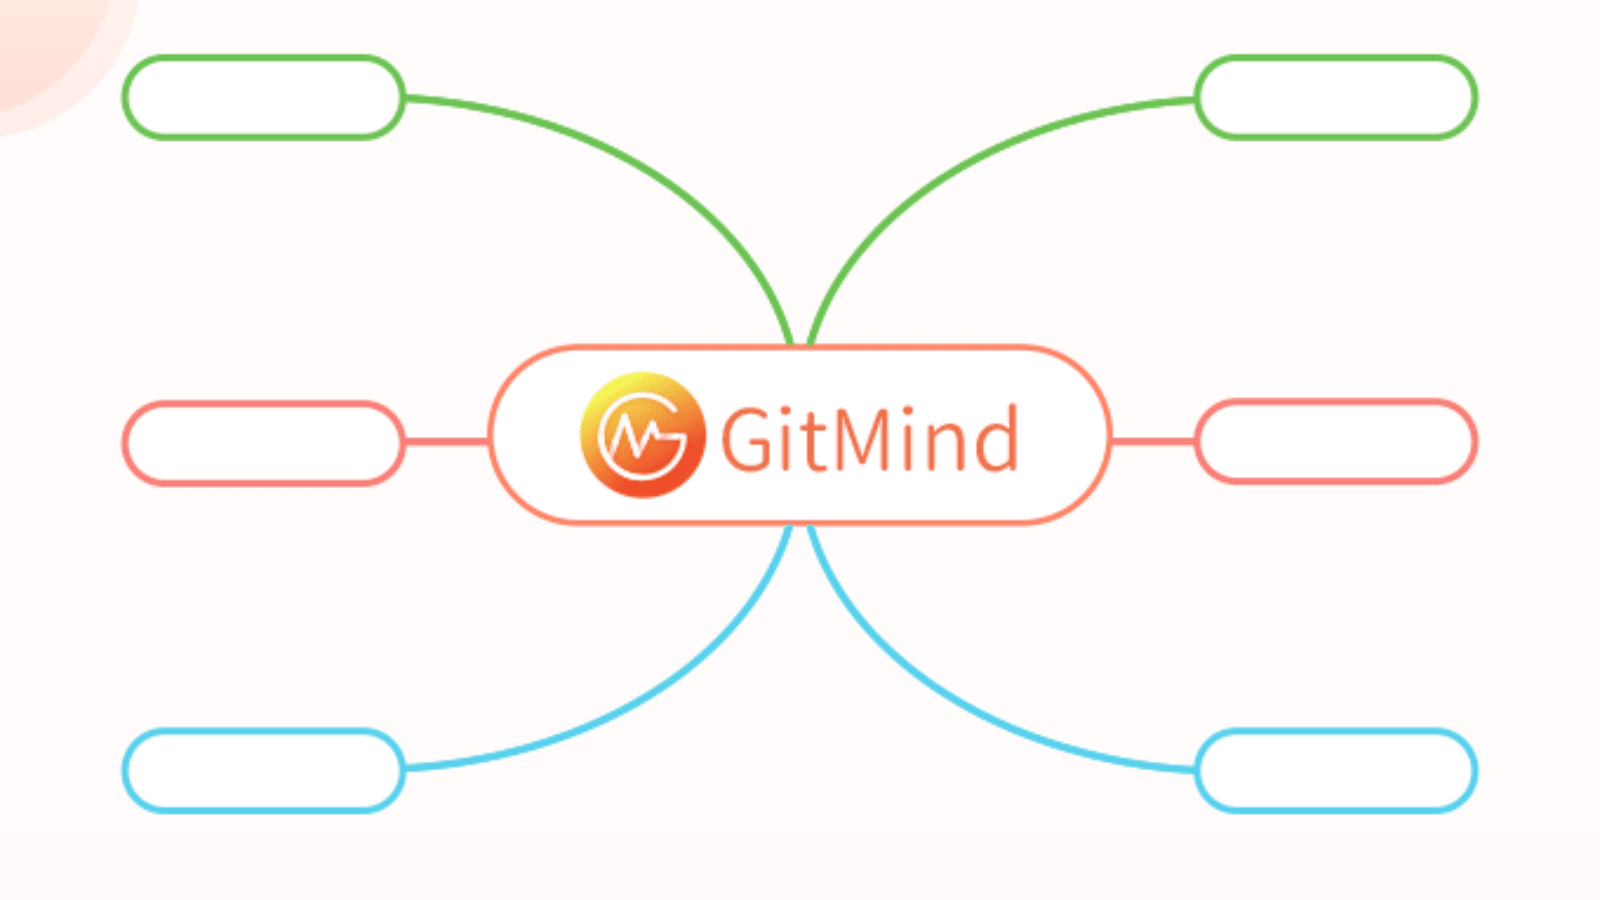 GitMind Logo